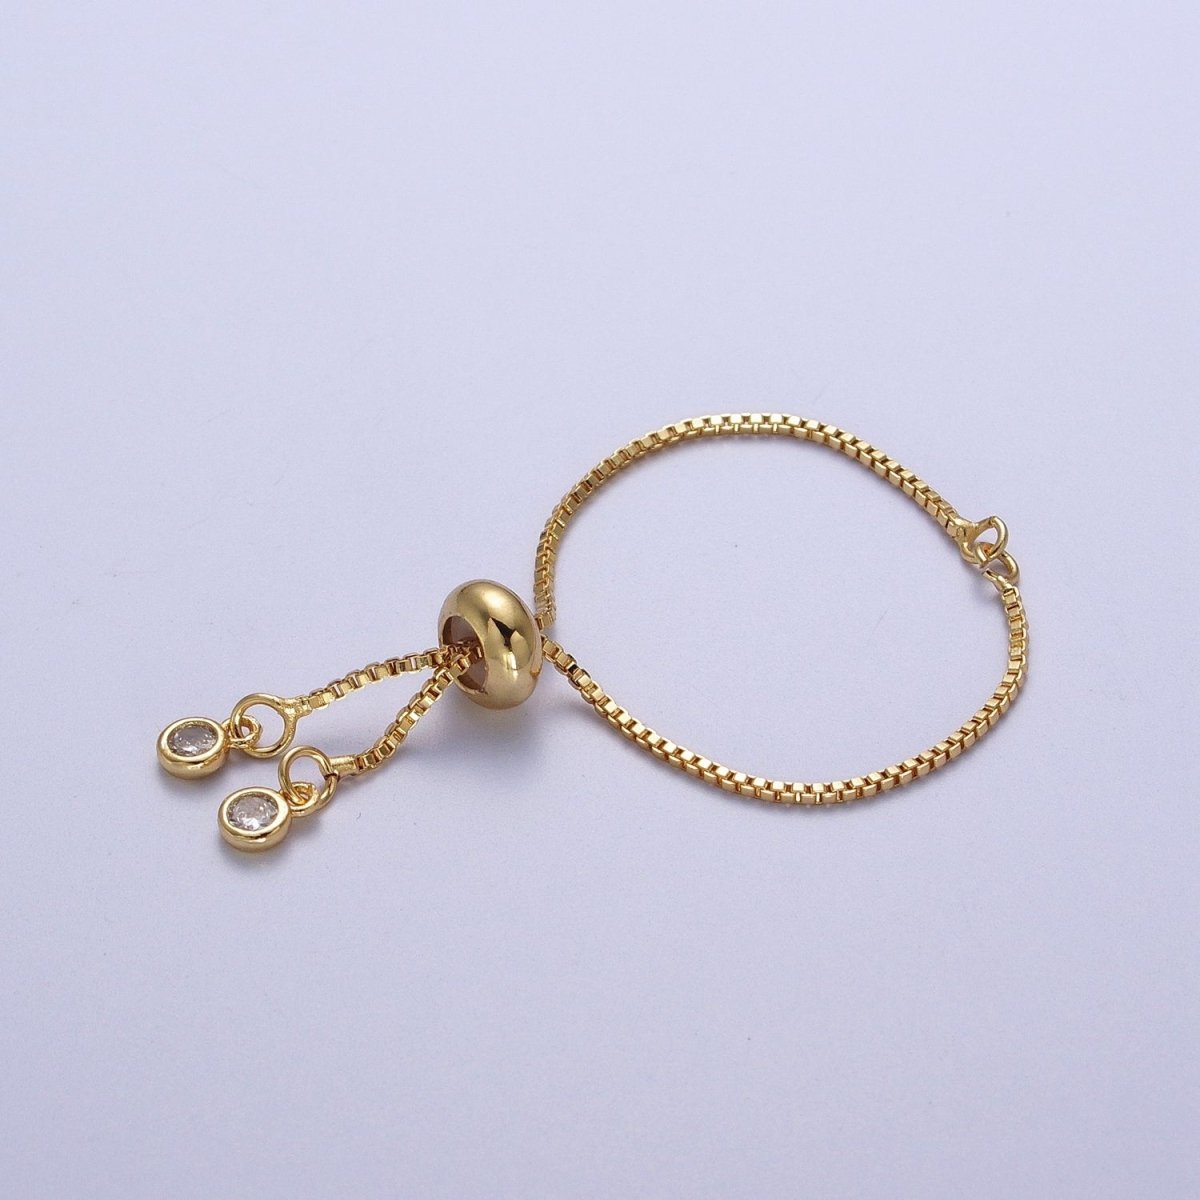 2.5 Inch Adjustable Box Chain Bracelet Supply in Gold, Silver, Black, Rose Gold | K-124 K-130 K-132 K-133 - DLUXCA